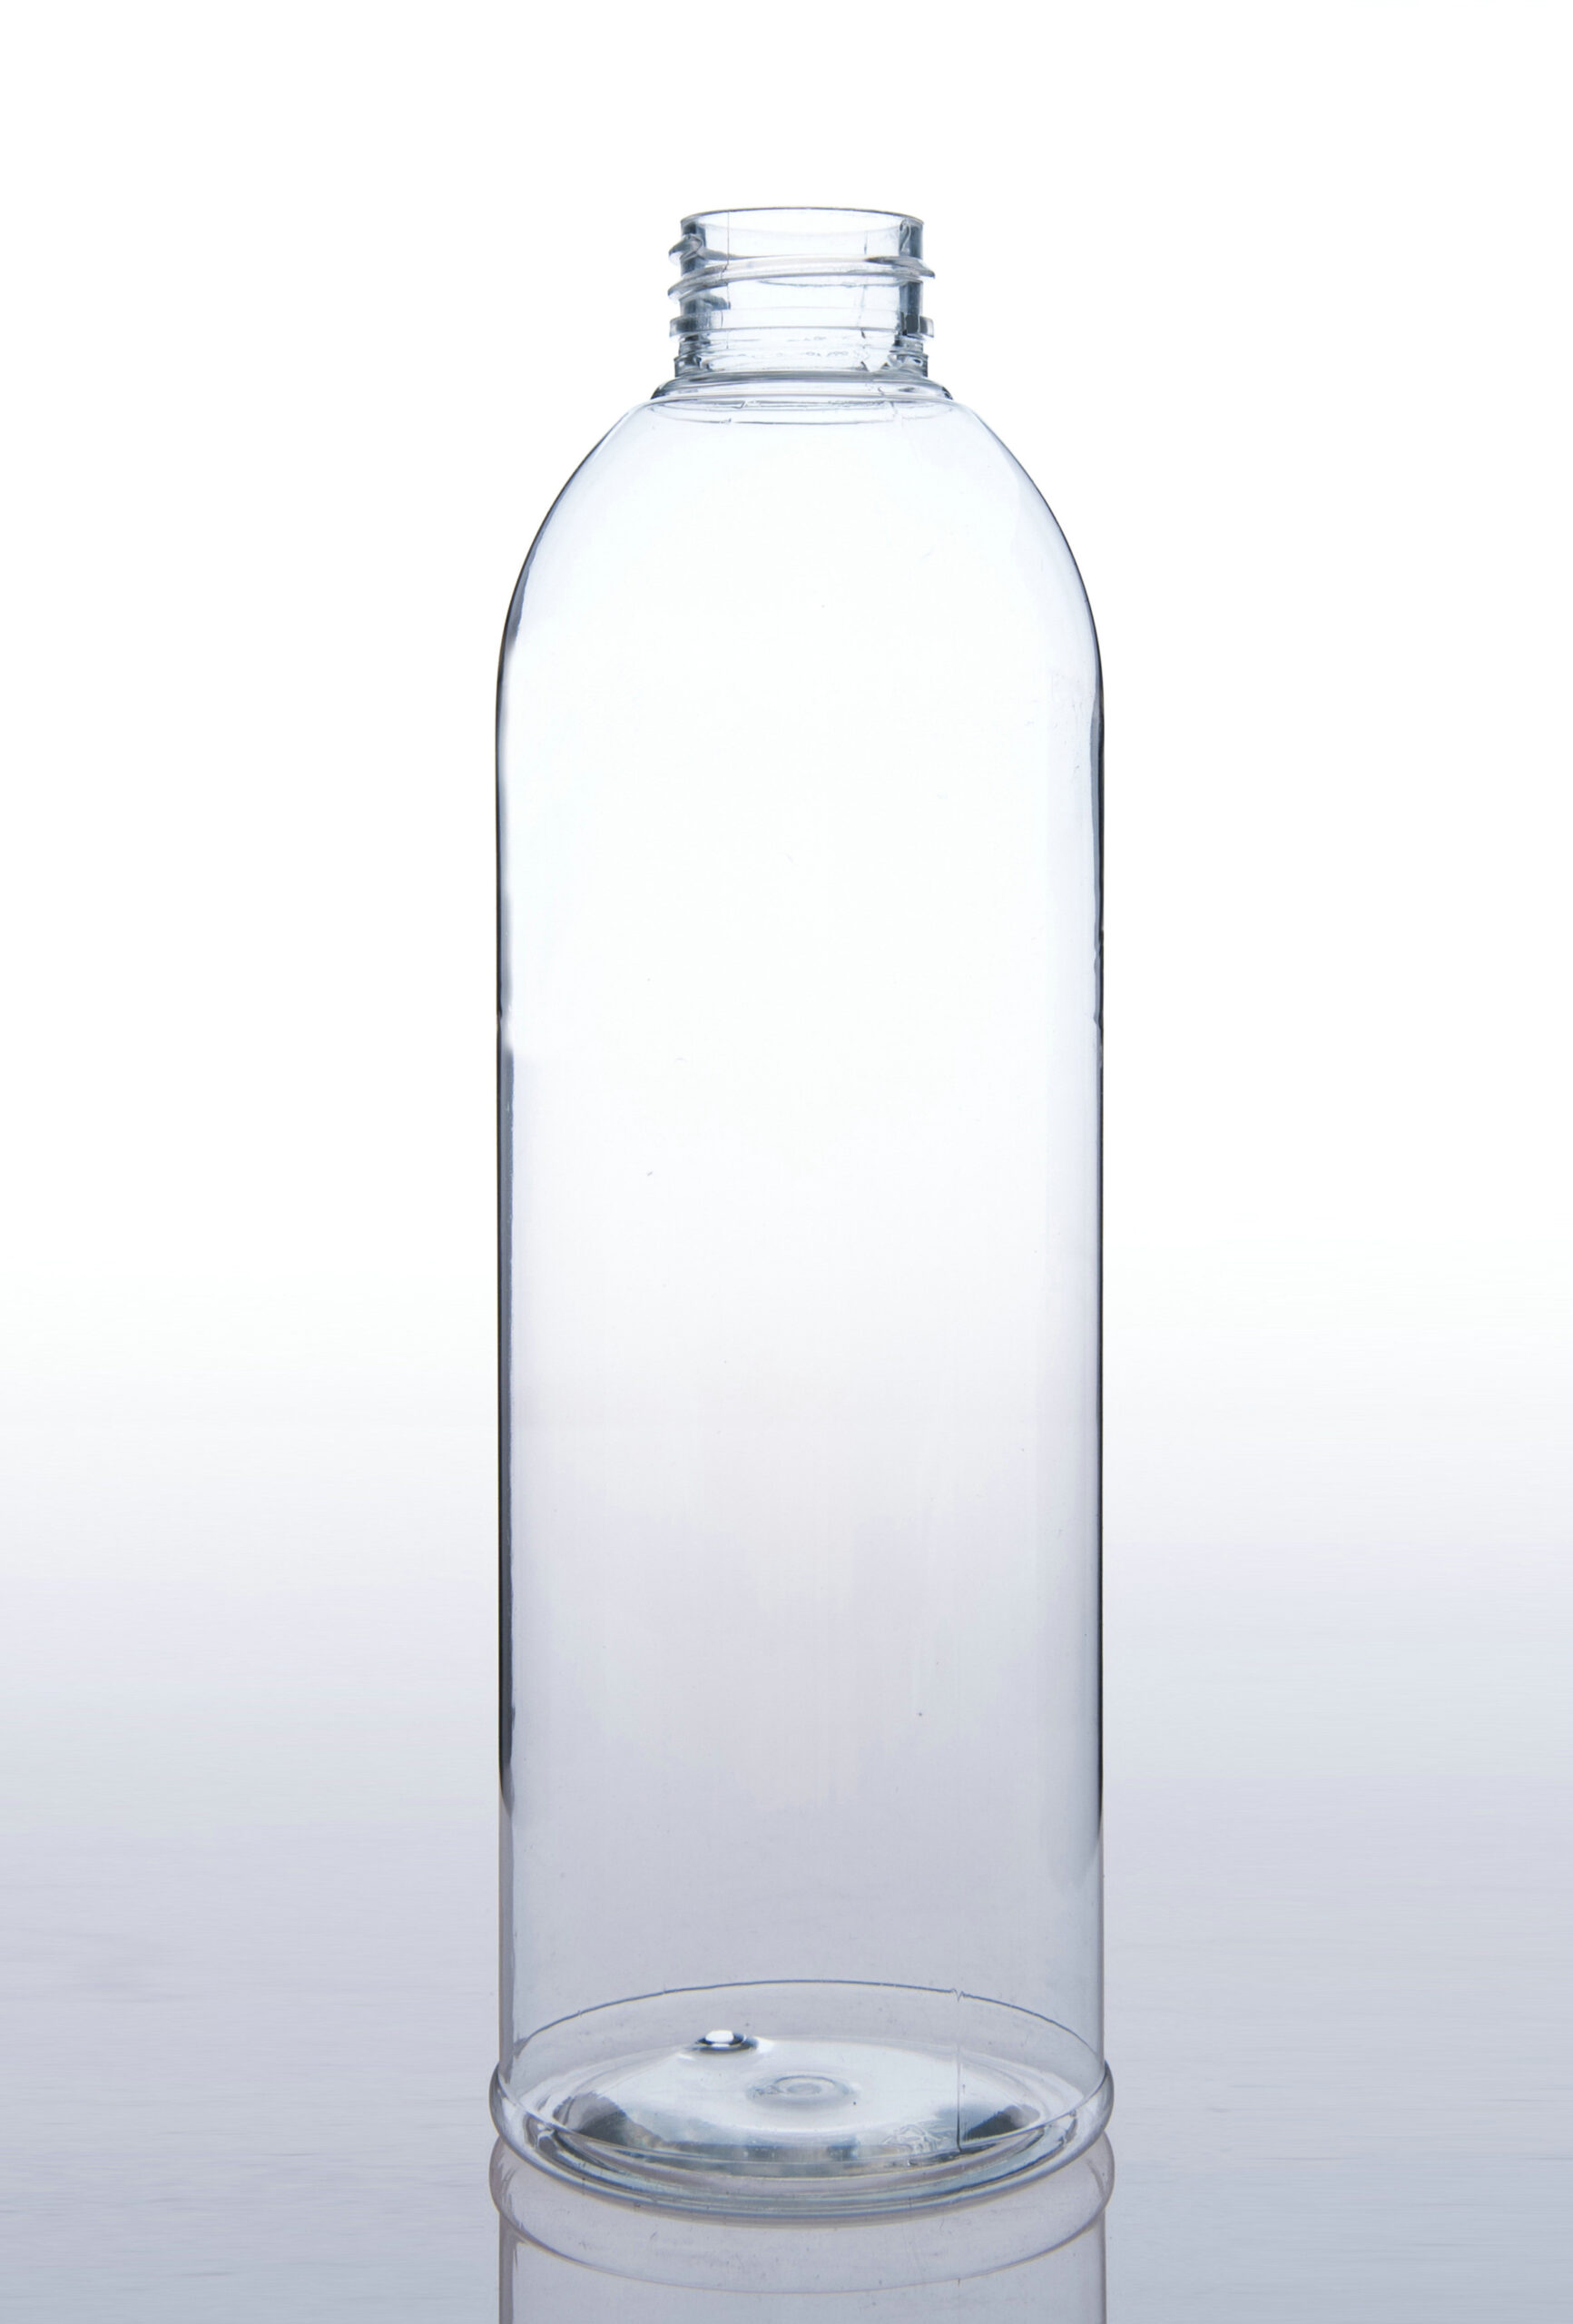 Clear Plastic Bottles - 1 Liter Round Bottle